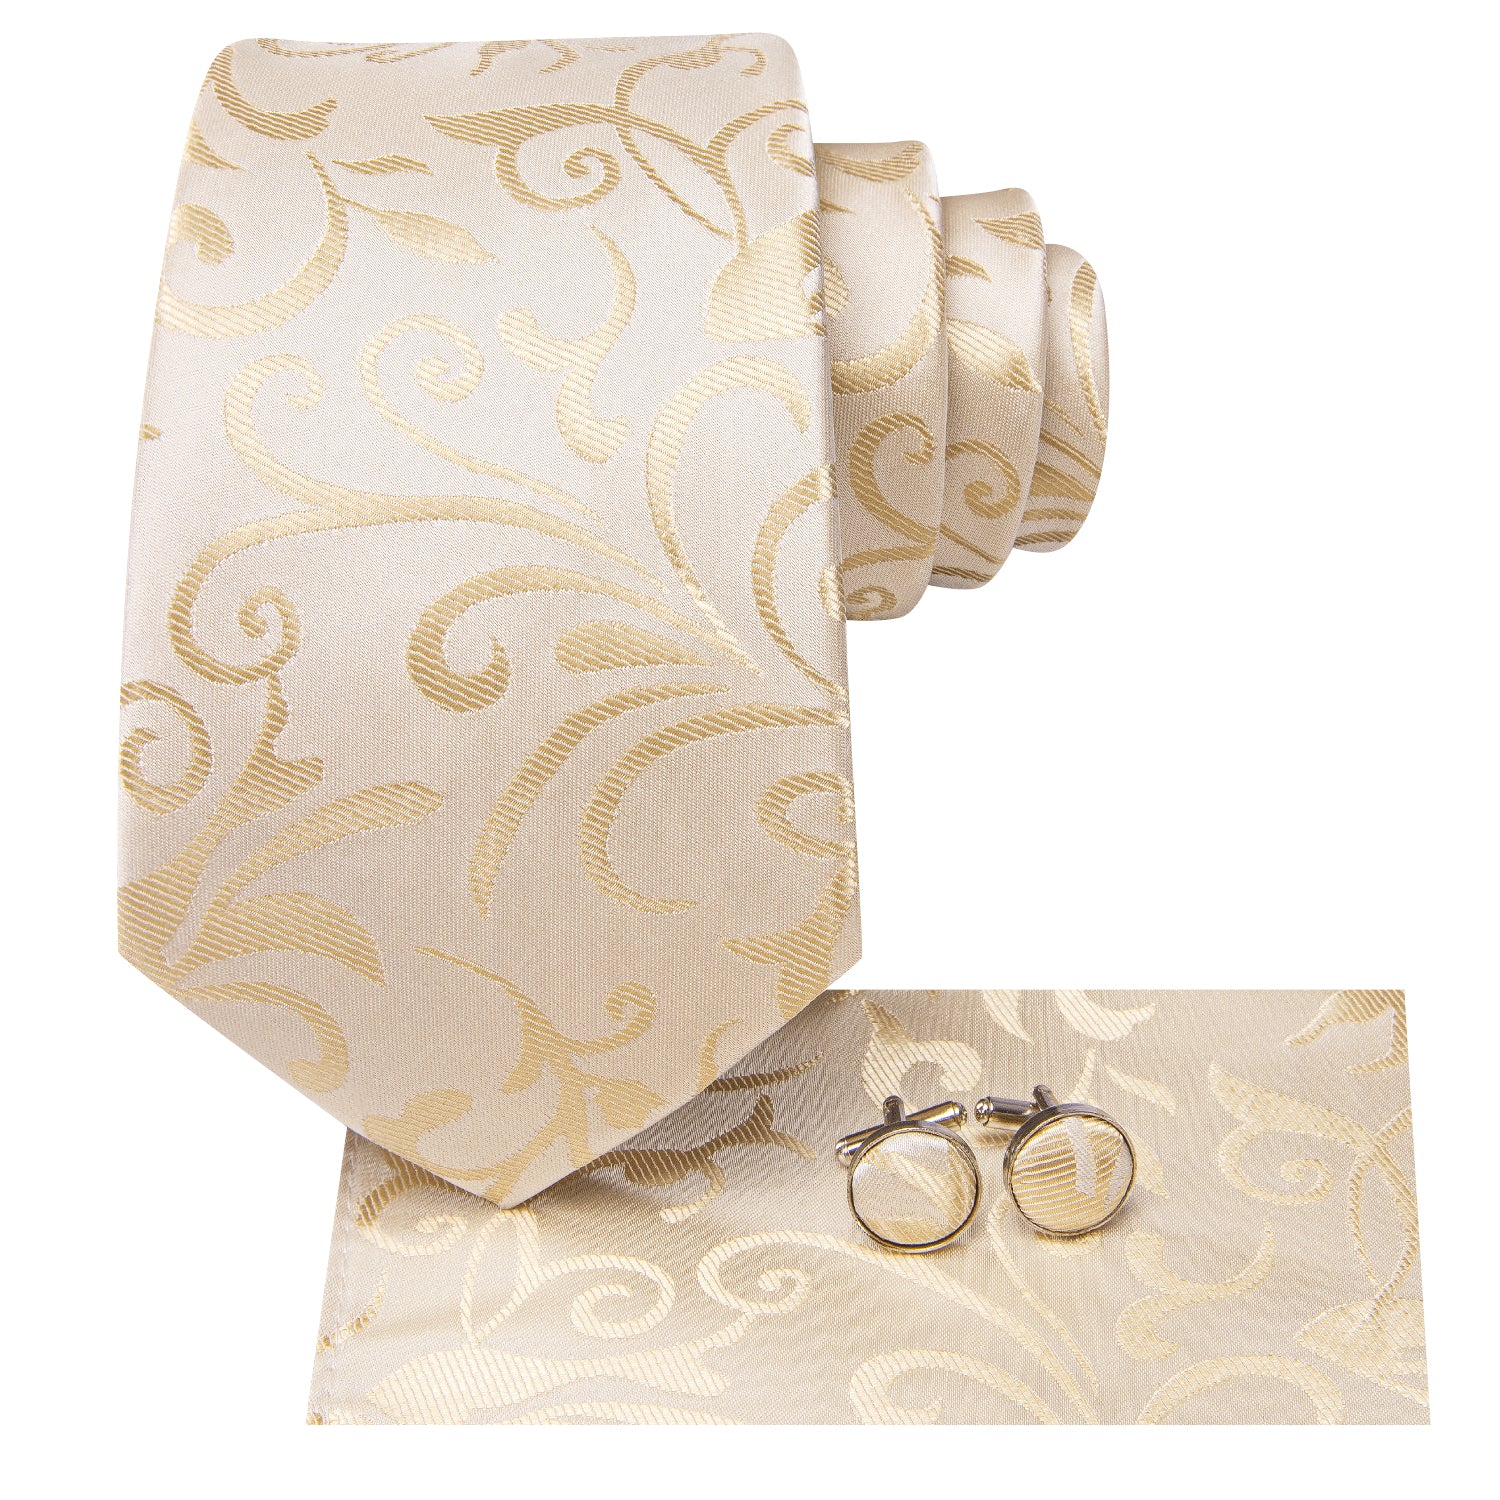 Hi-Tie New Beige Floral Men's Tie Pocket Square Cufflinks Set